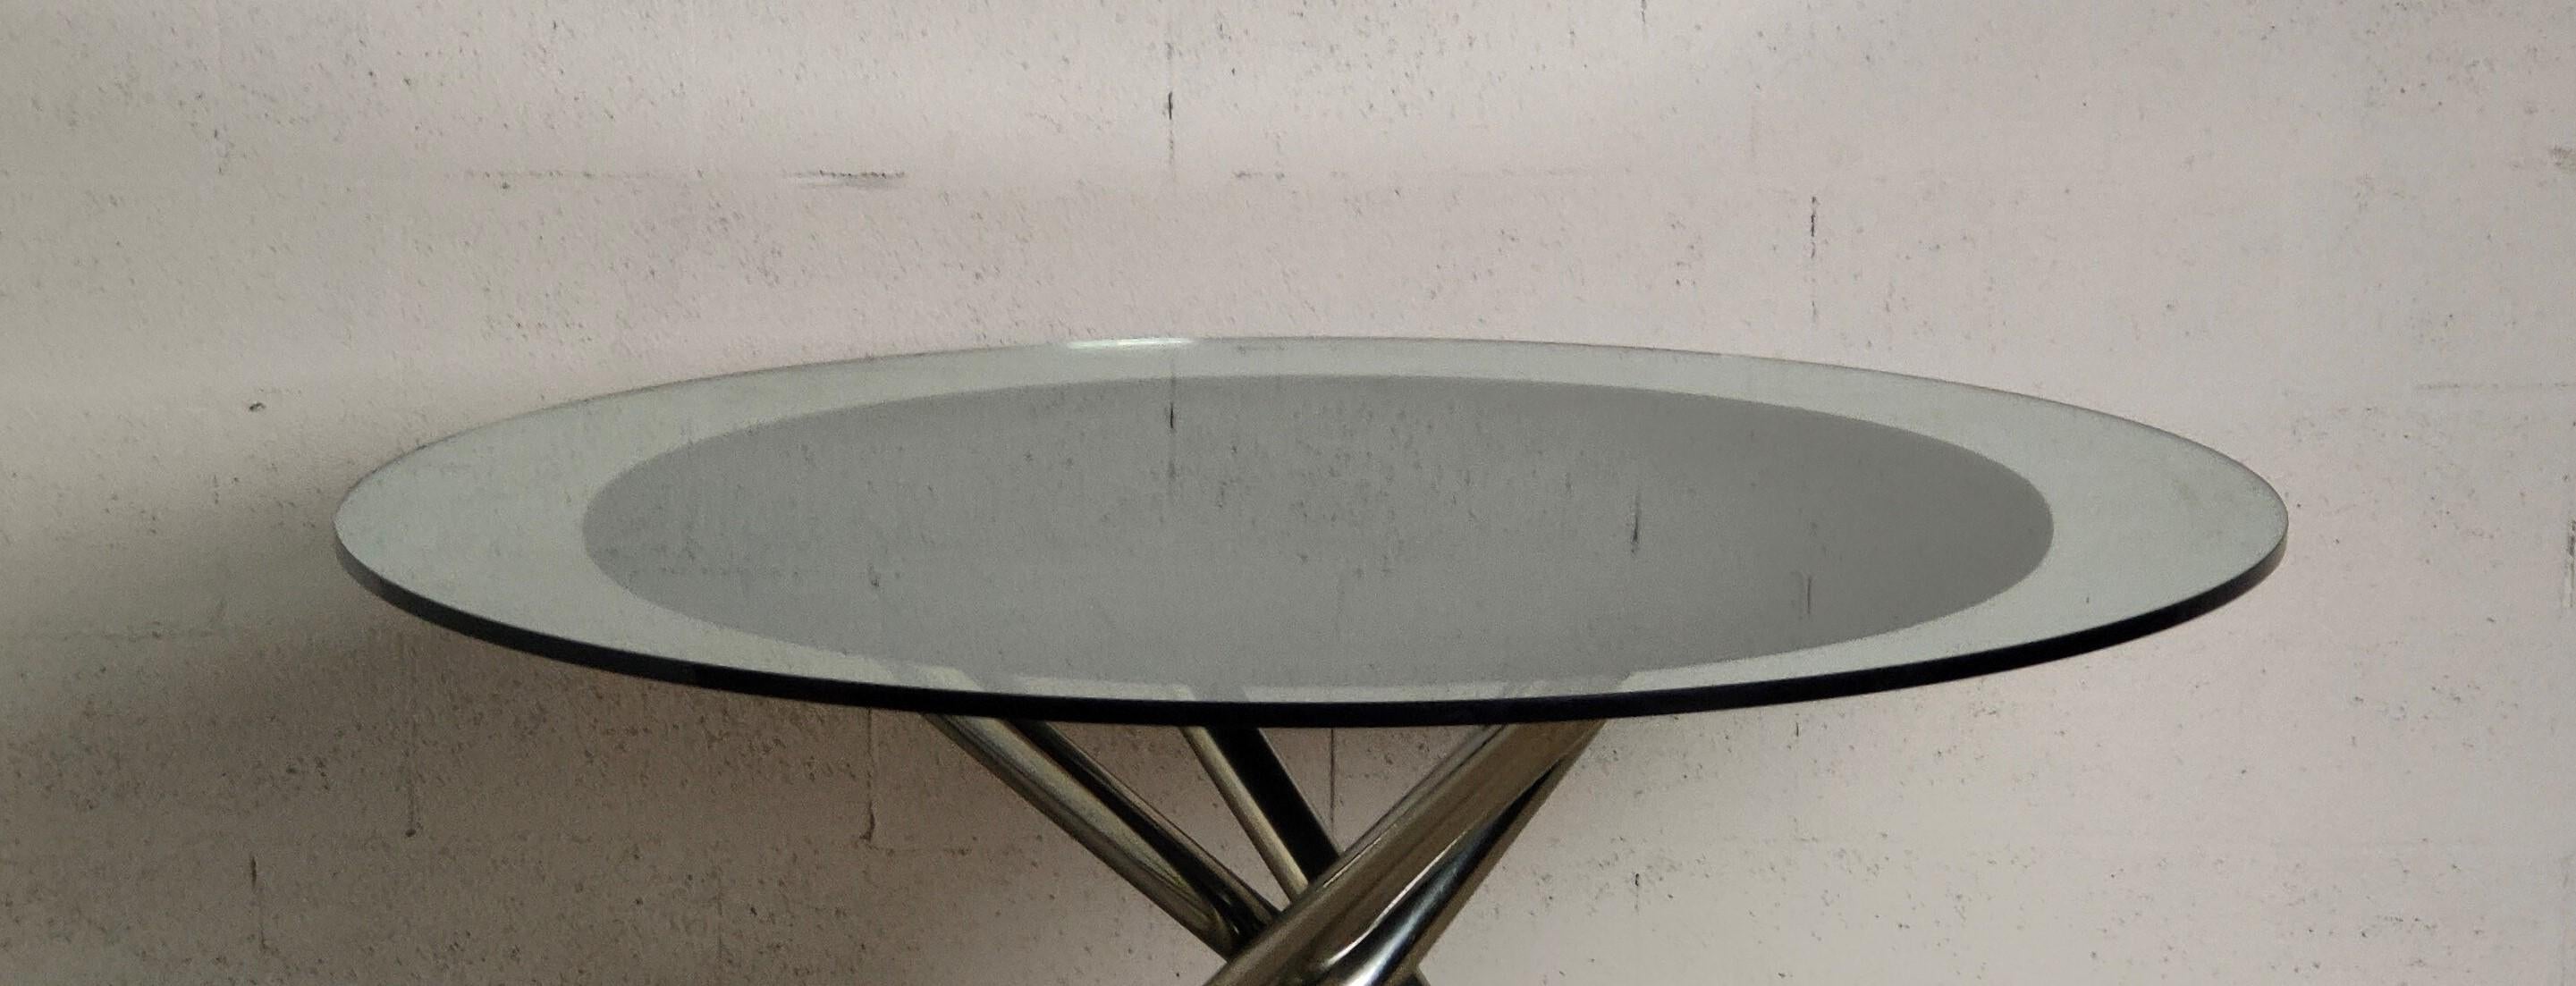 Italian Nodo Round Glass Table by Carlo Bartoli for Tisettanta 1970s